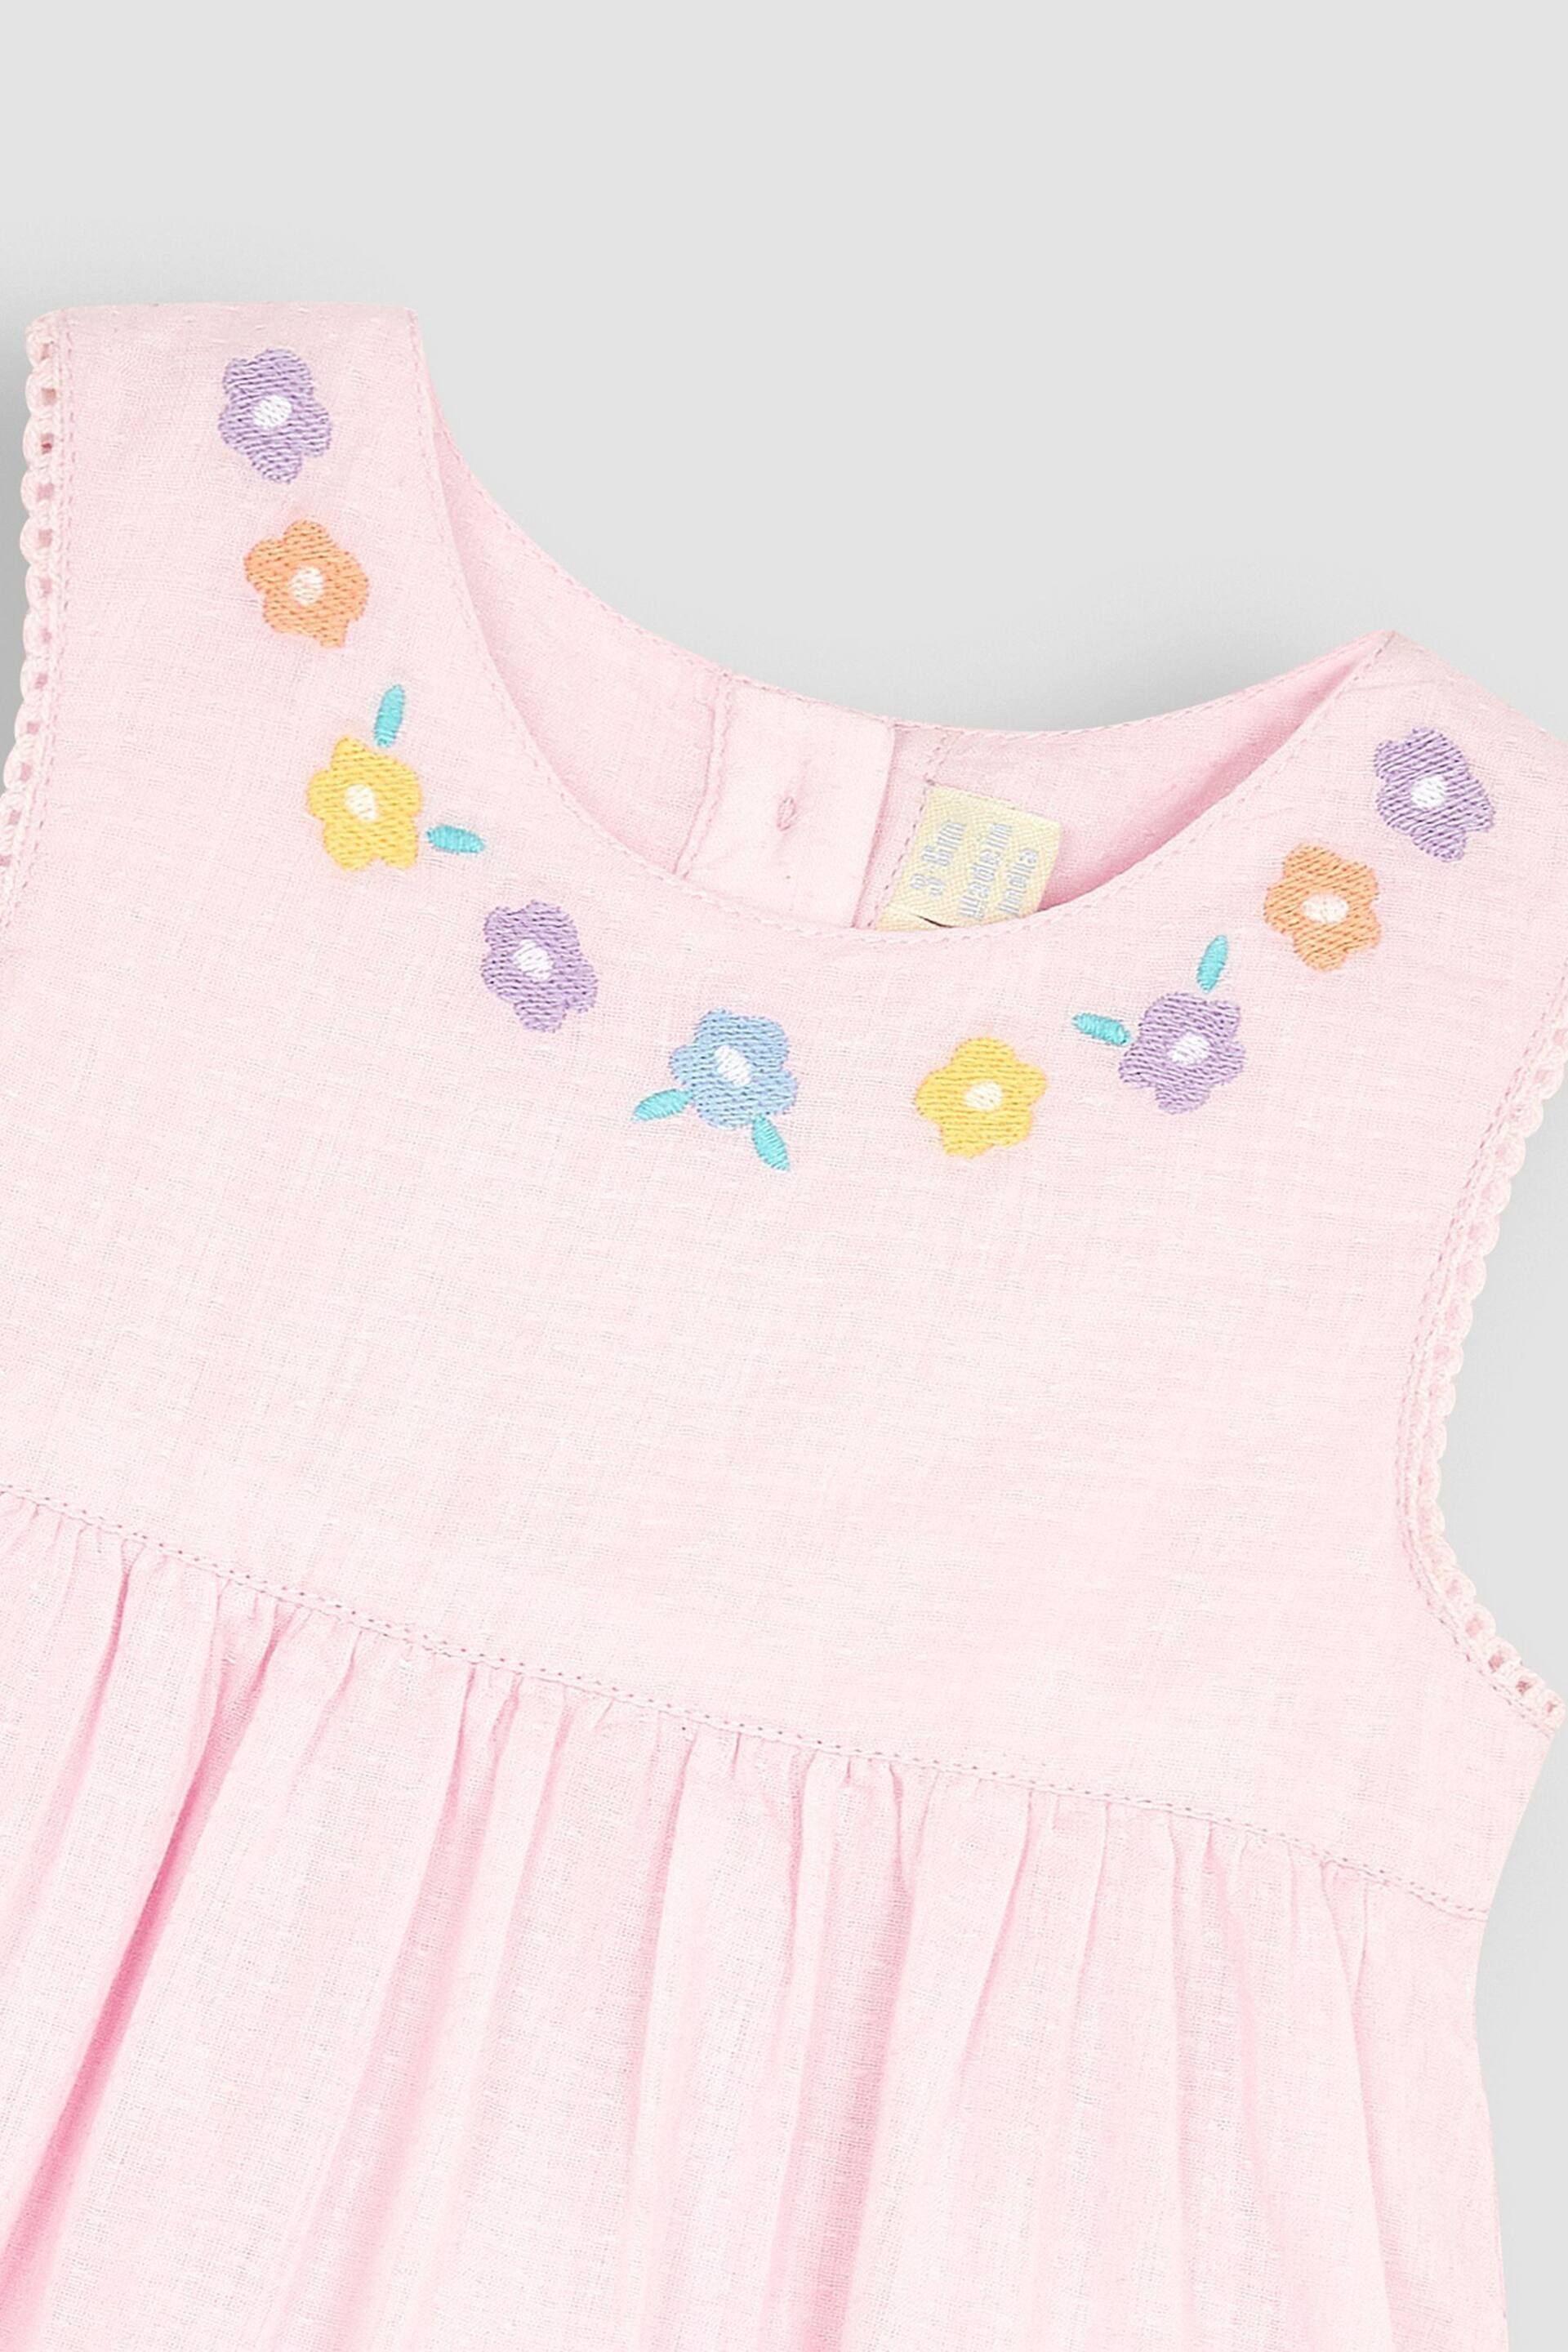 JoJo Maman Bébé Pink Duck Embroidered Baby Dress - Image 4 of 4